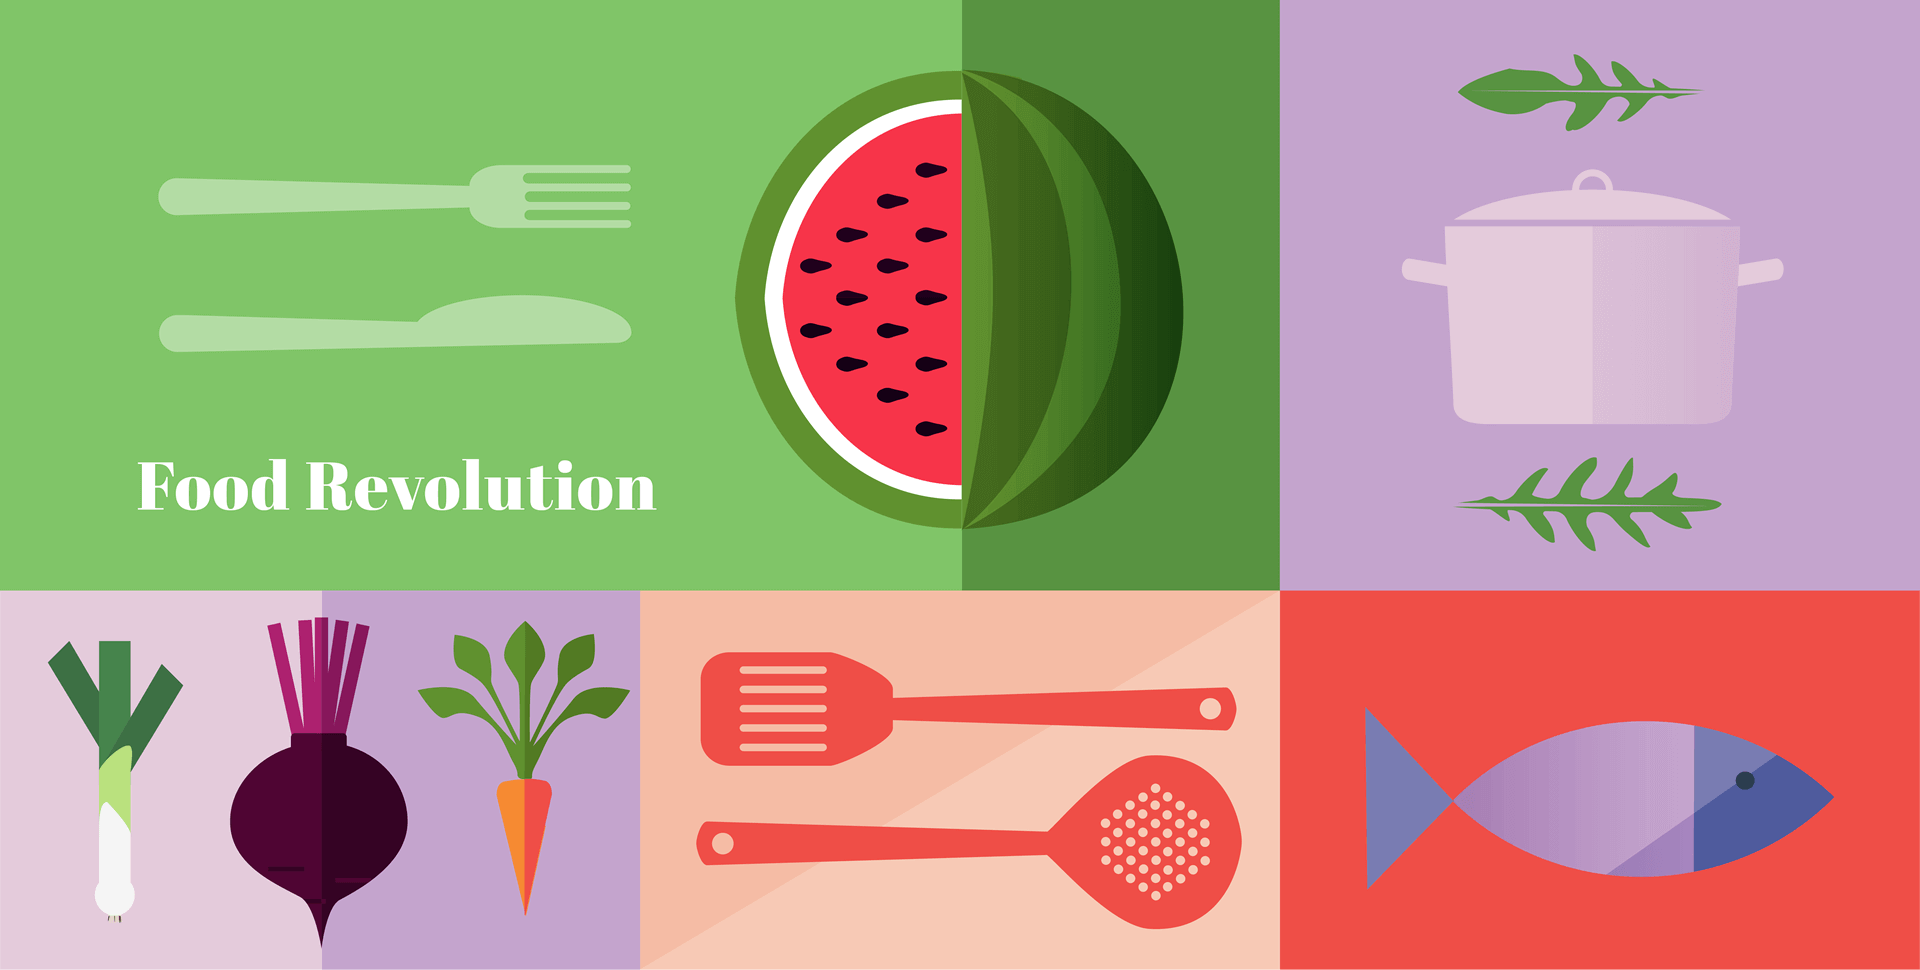 Food revolution graphic panels